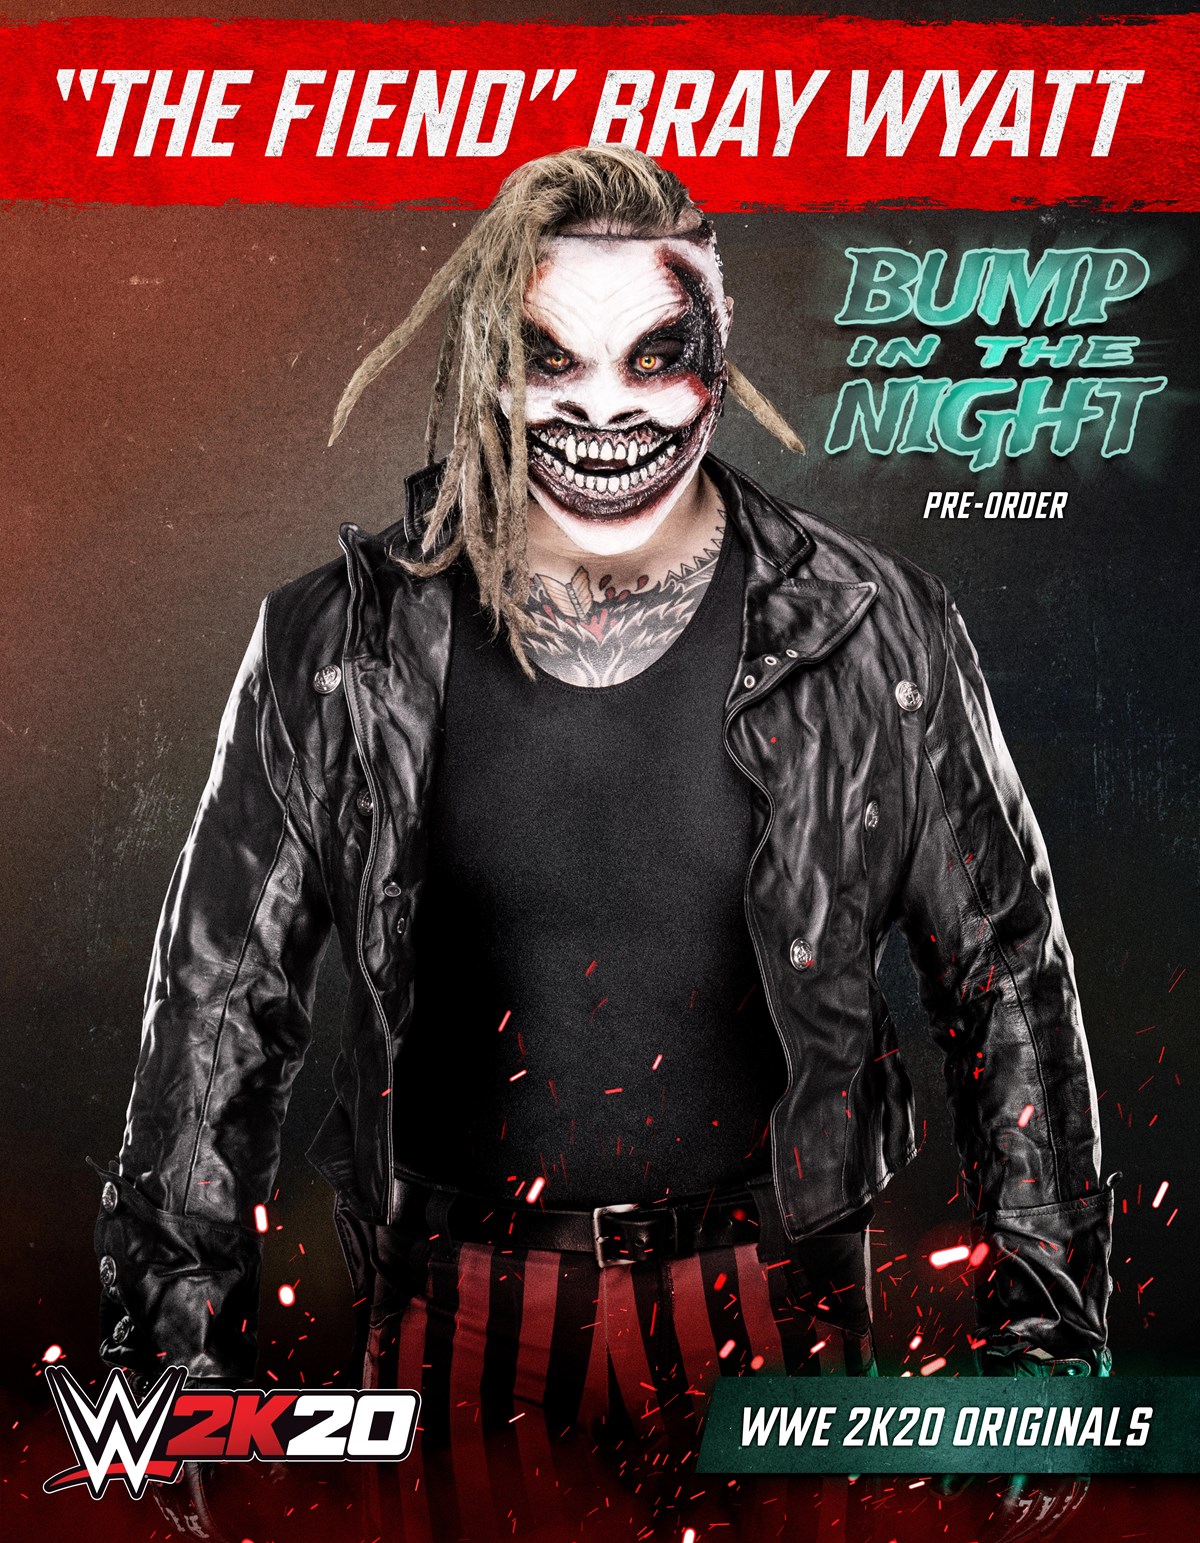 The Fiend, Bray Wyatt Headlines First WWE 2K20 Originals Pack , Bump in the Night,GamersRD